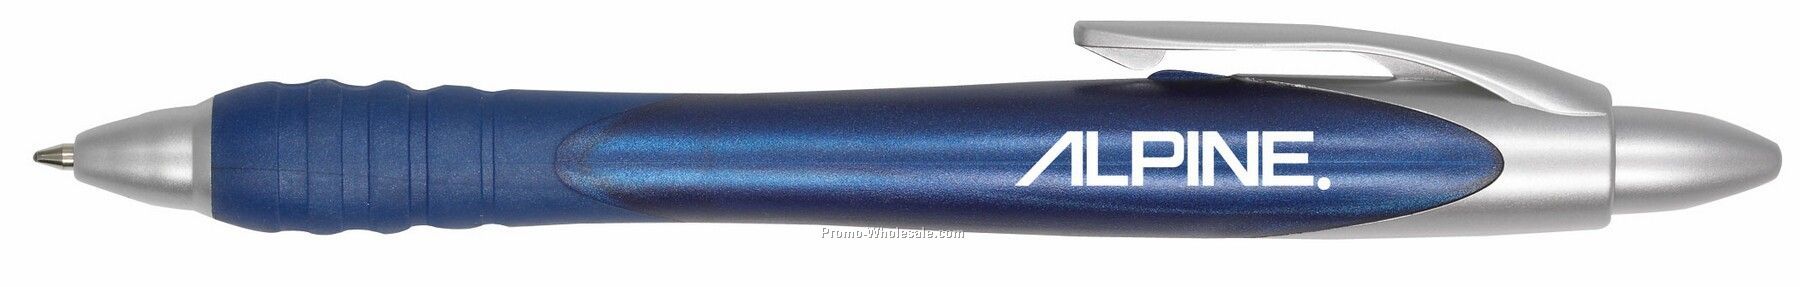 Olympia Metallic Barrel Pen With Matching Grip - Next Day